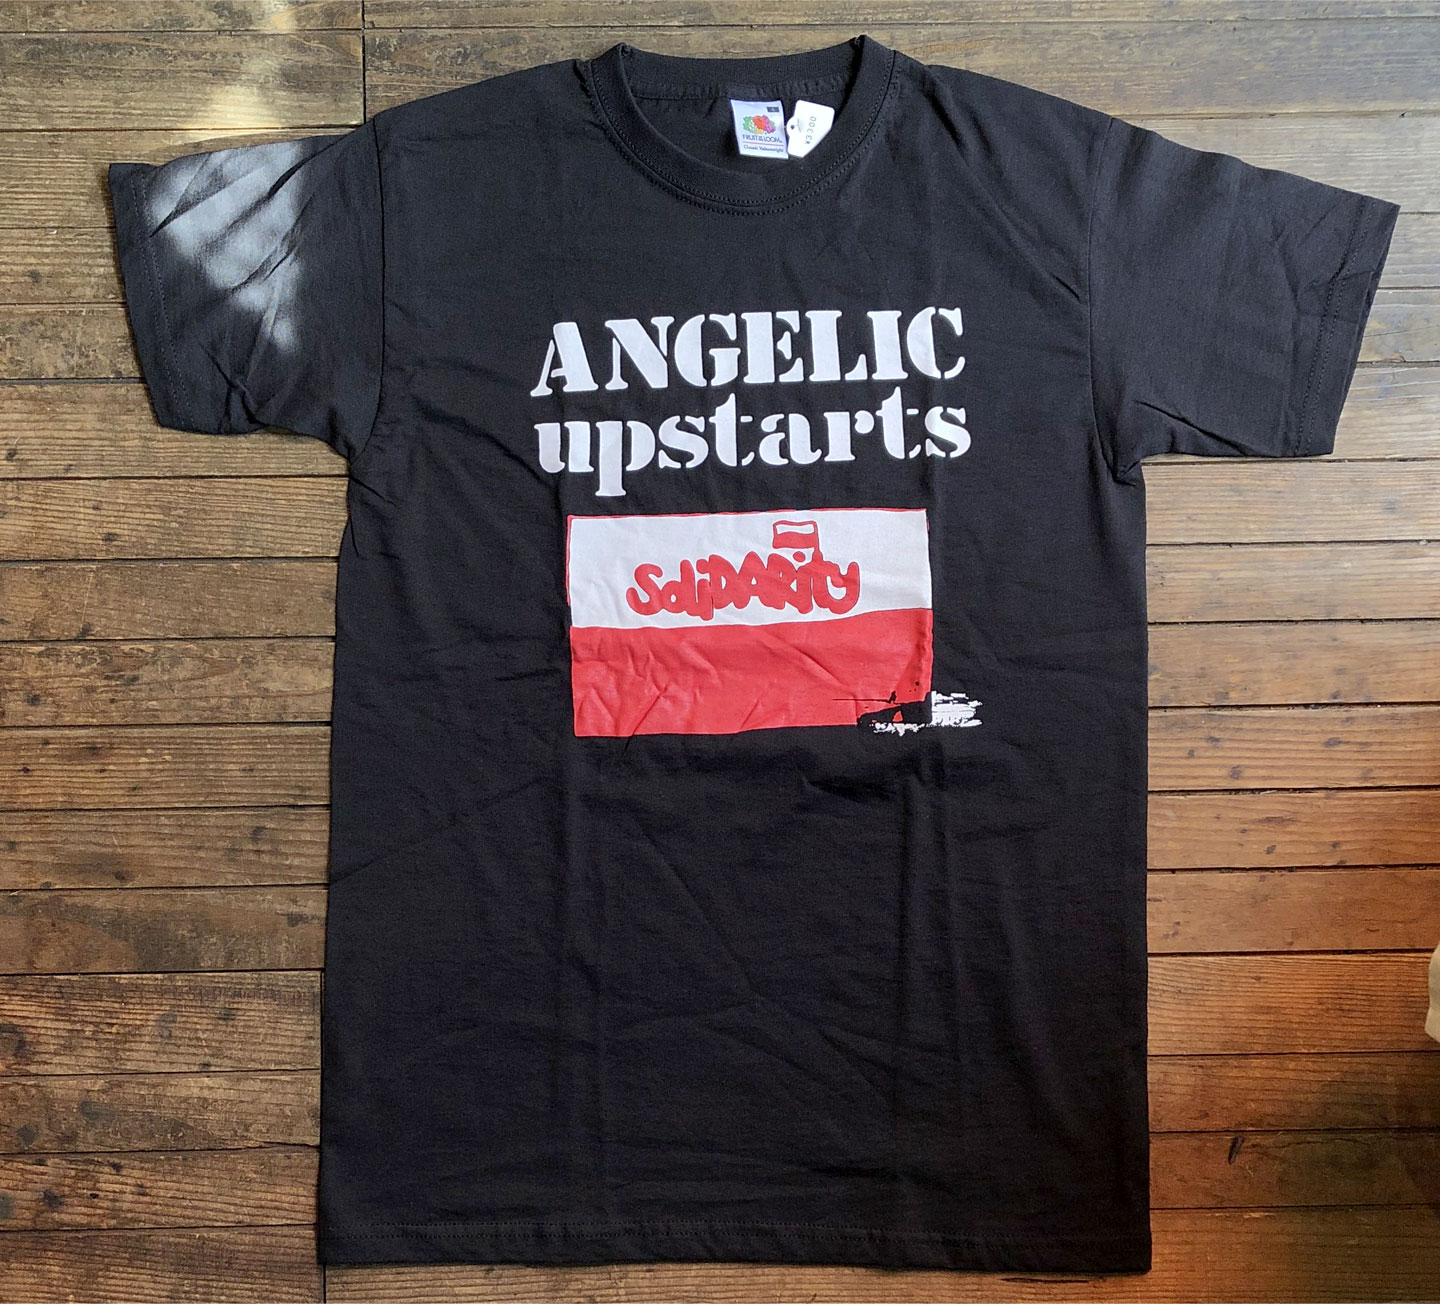 ANGELIC UPSTARTS Tシャツ SOLIDARITY